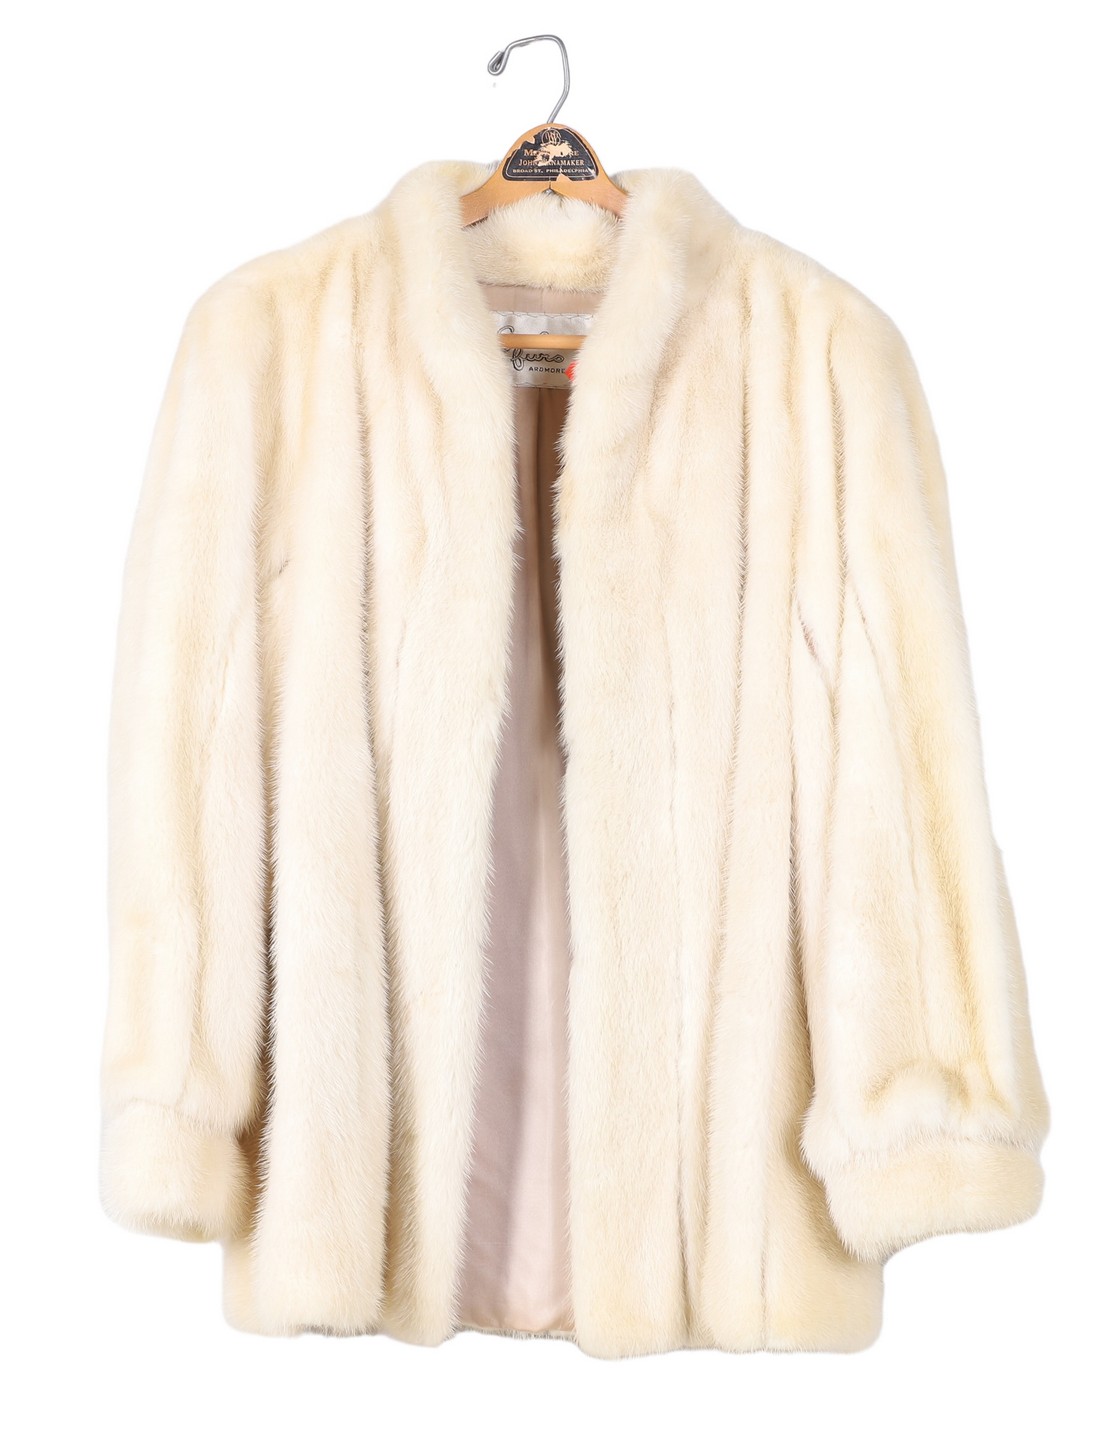 Gaylon Furs cream mink coat, silk